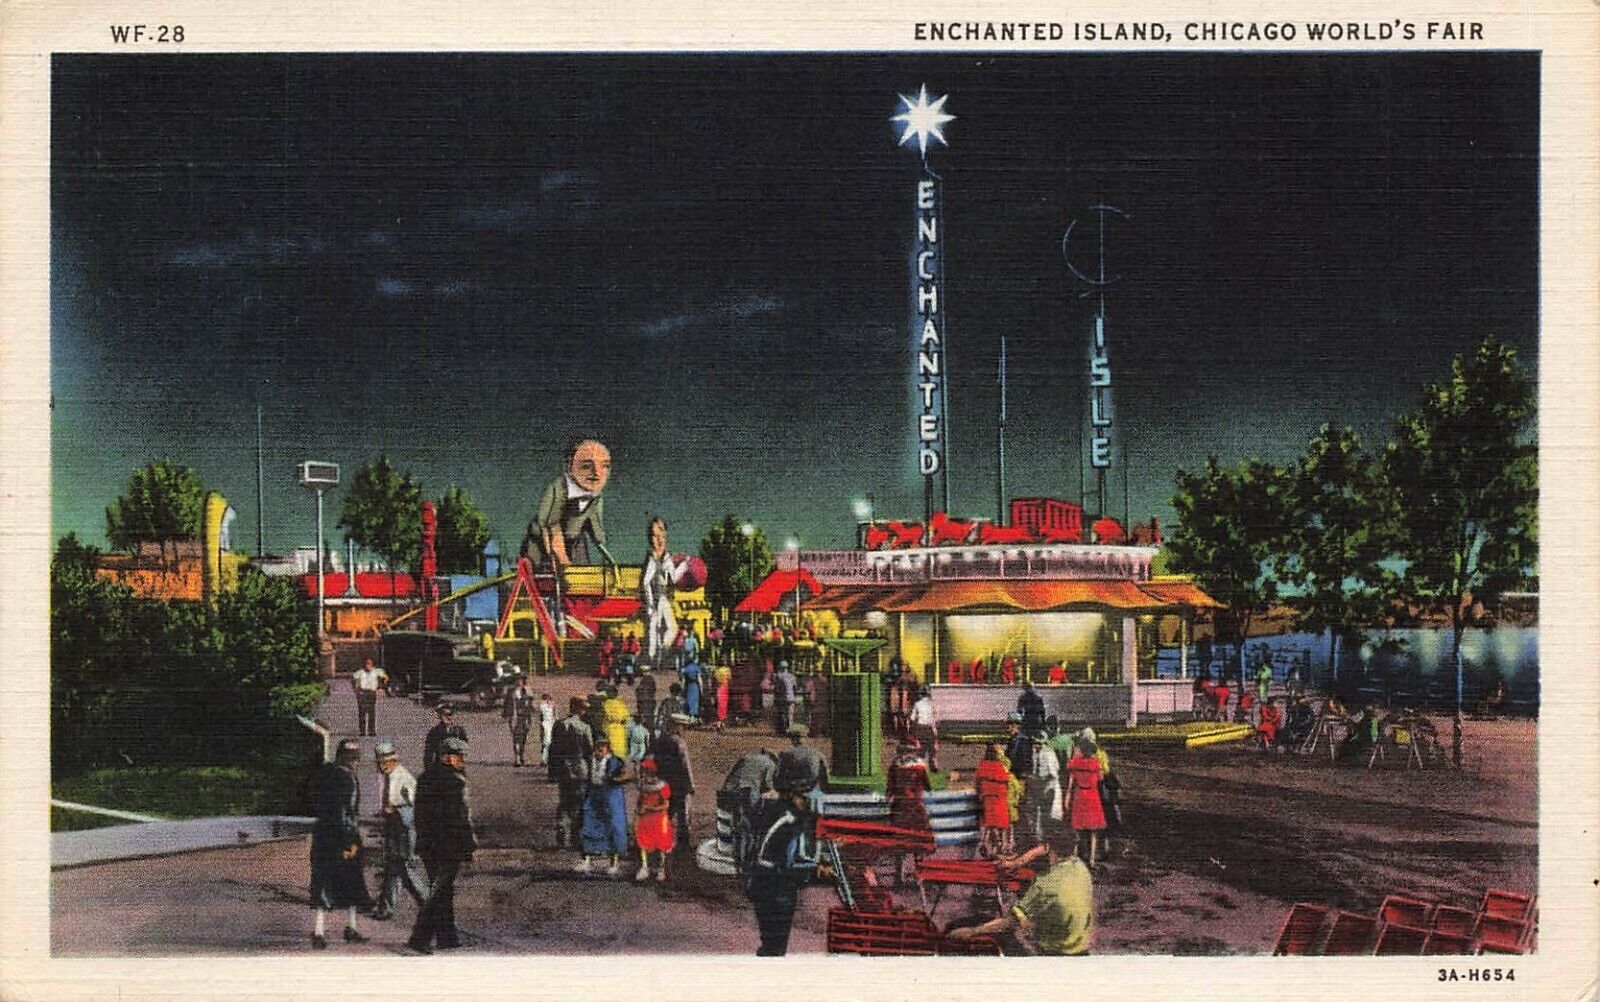 1908 ILLINOIS POSTCARD: ENCHANTED ISLAND CHICAGO WORLD'S FAIR AT NIGHT, IL